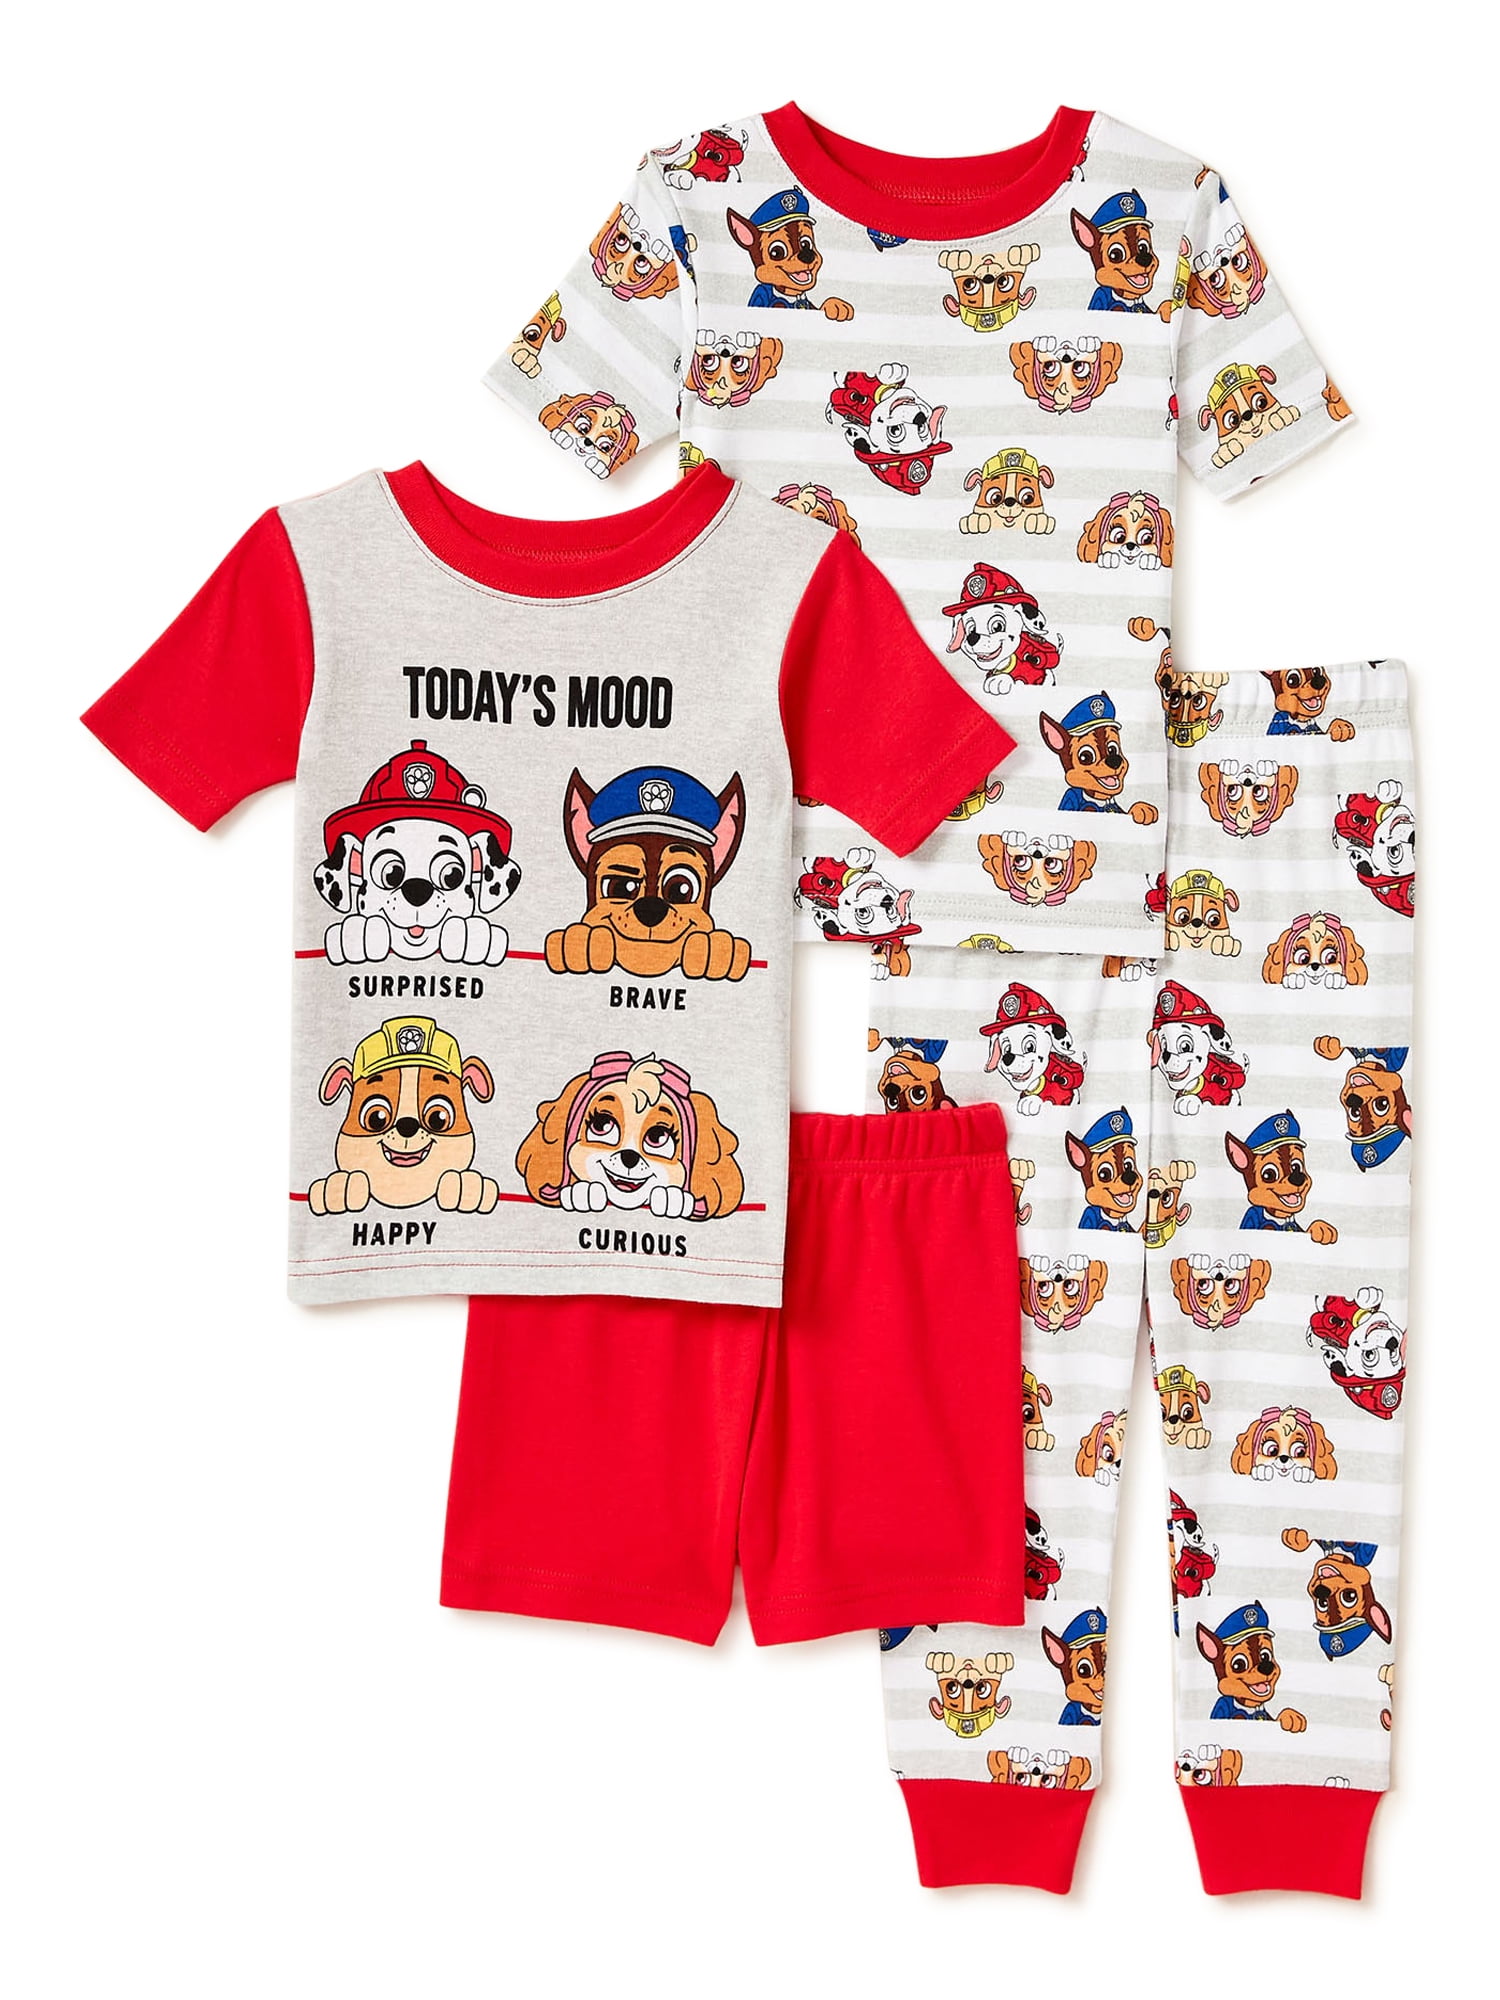 Paw Patrol Toddler Boys Loose Fit Short Sleeve Top Shorts, Pajamas Set, 2T-5T - Walmart.com